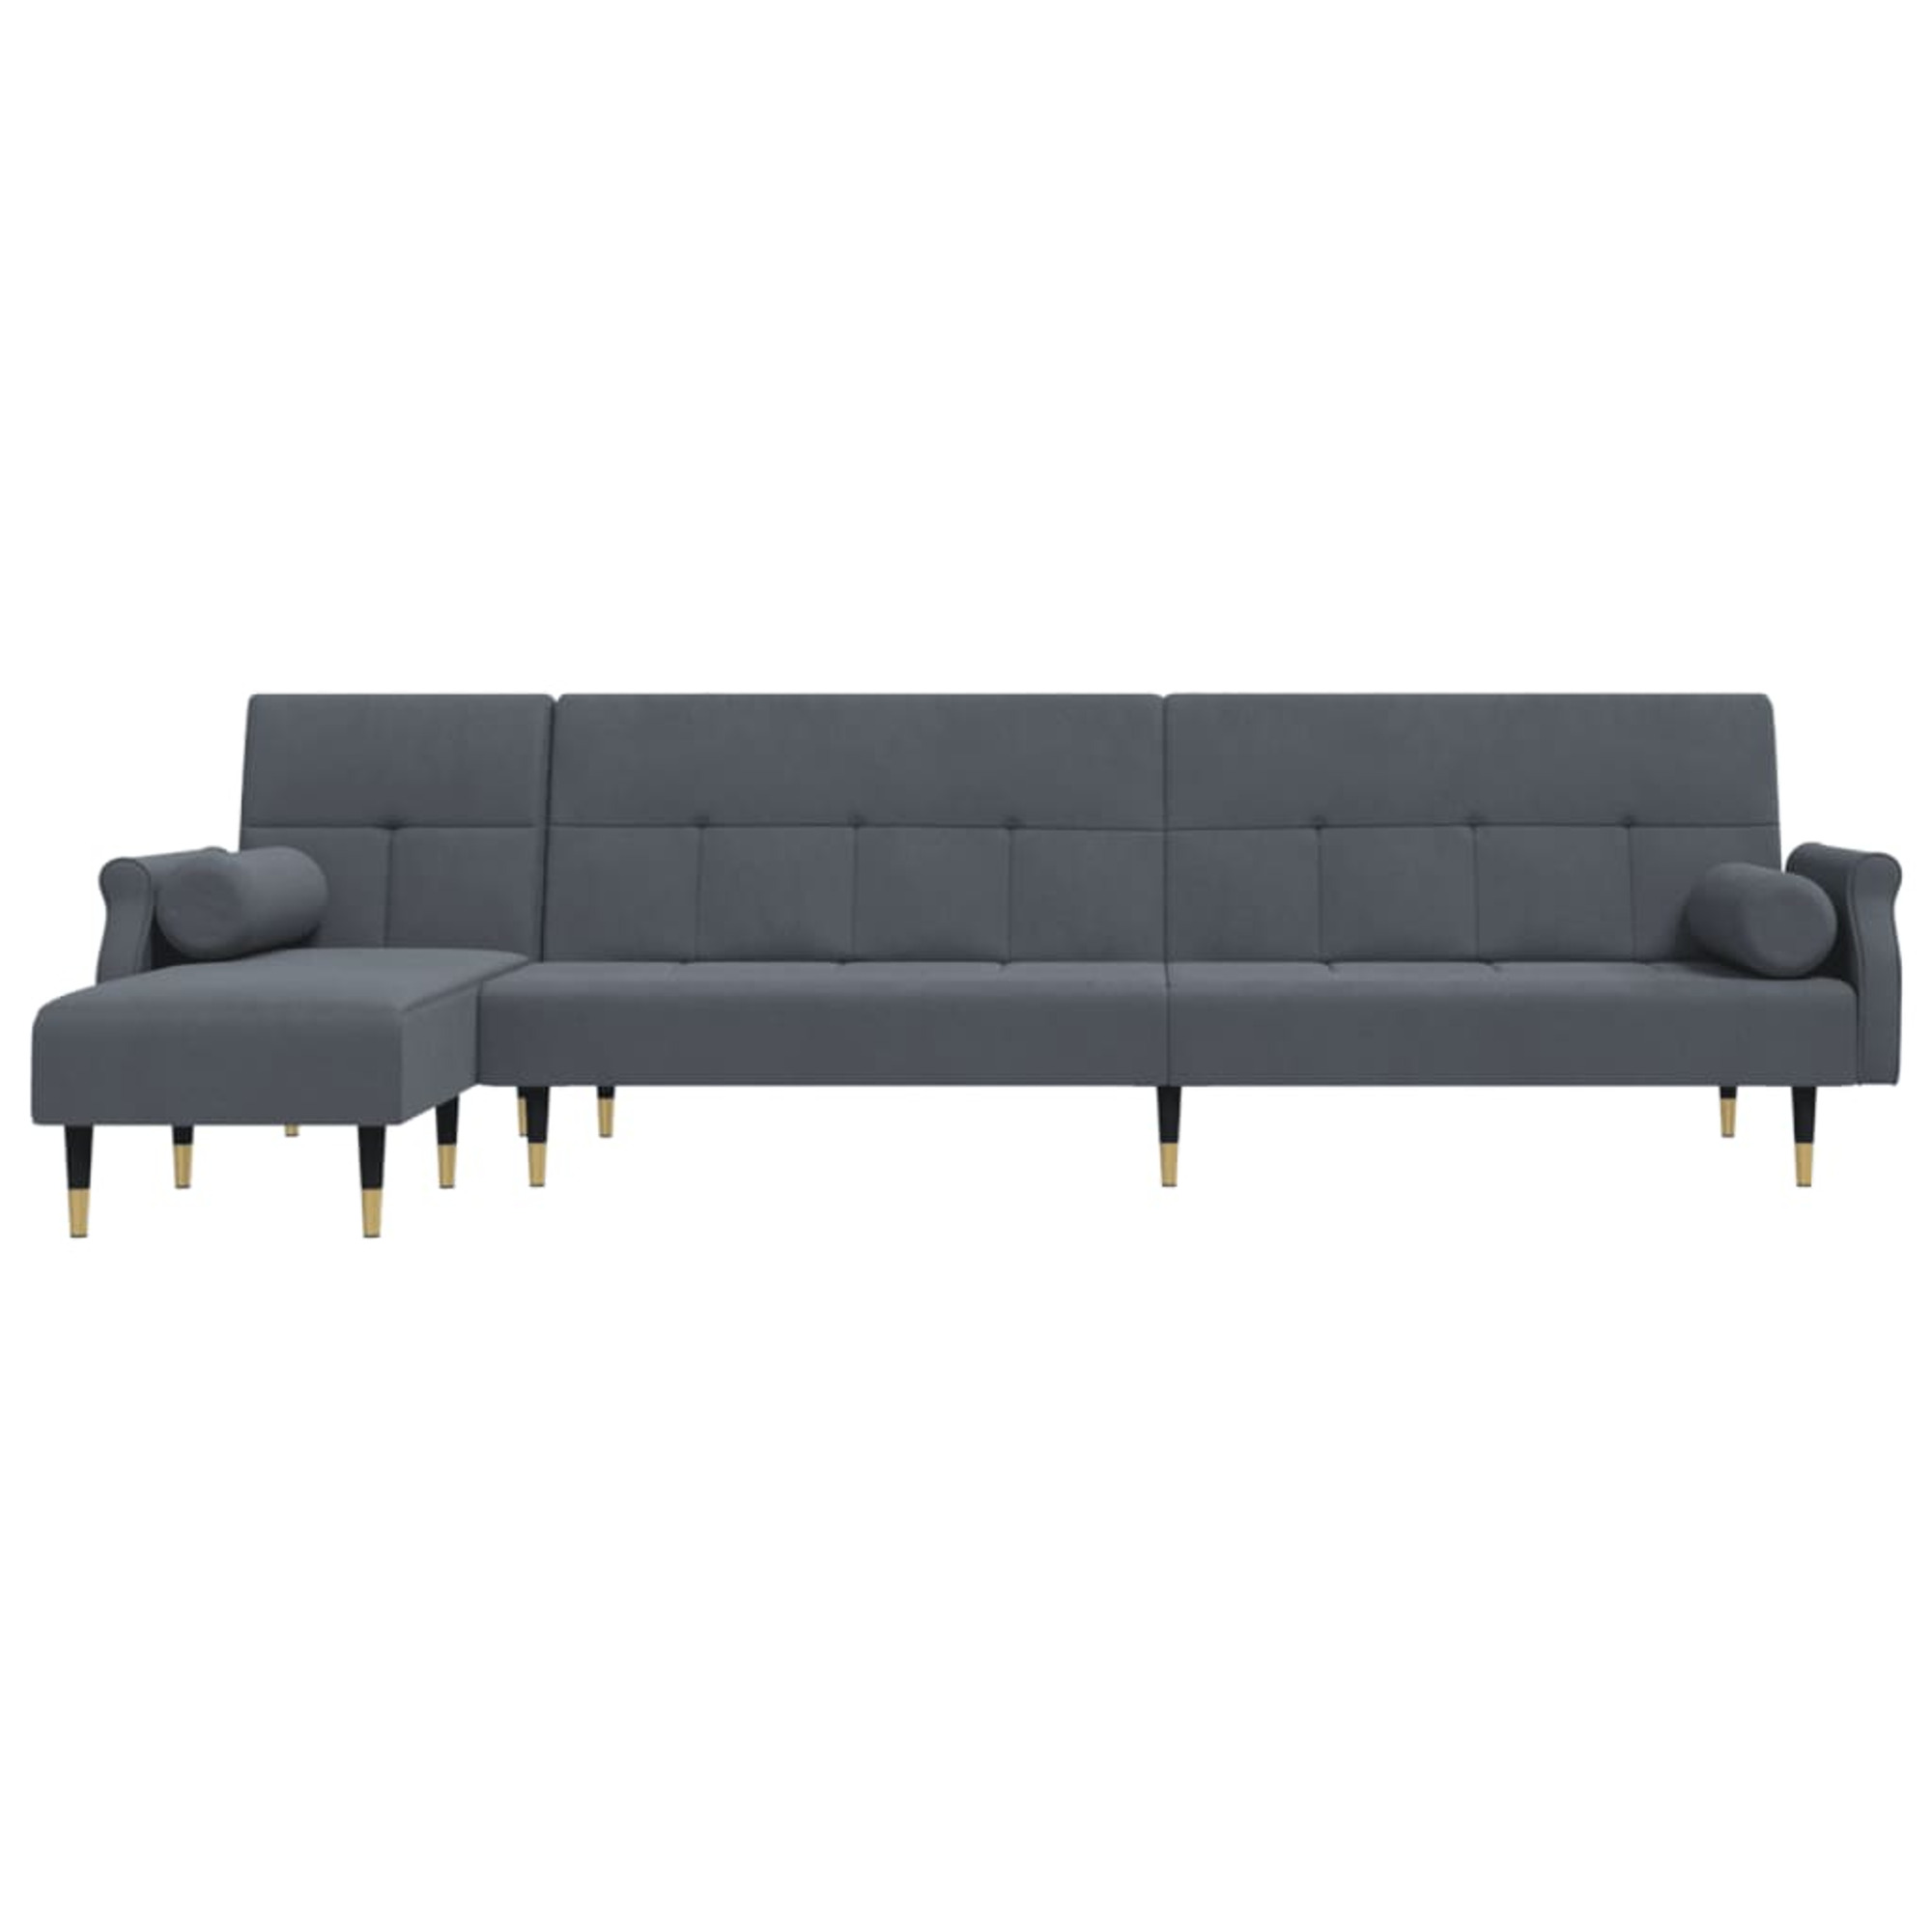 Queen Sleeper Sofa From Sears Com